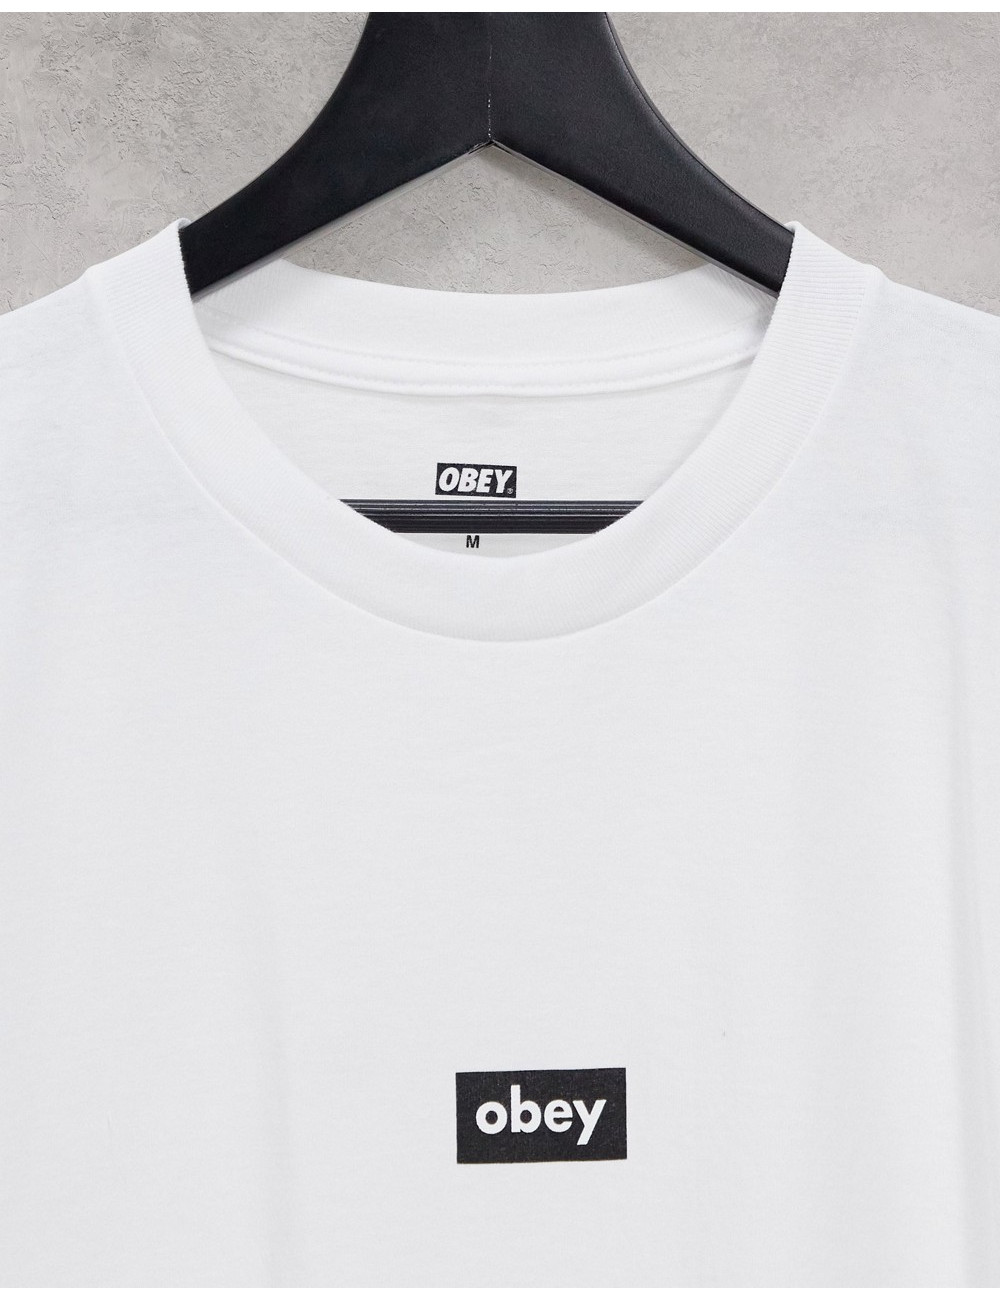 Obey black bar logo t-shirt...